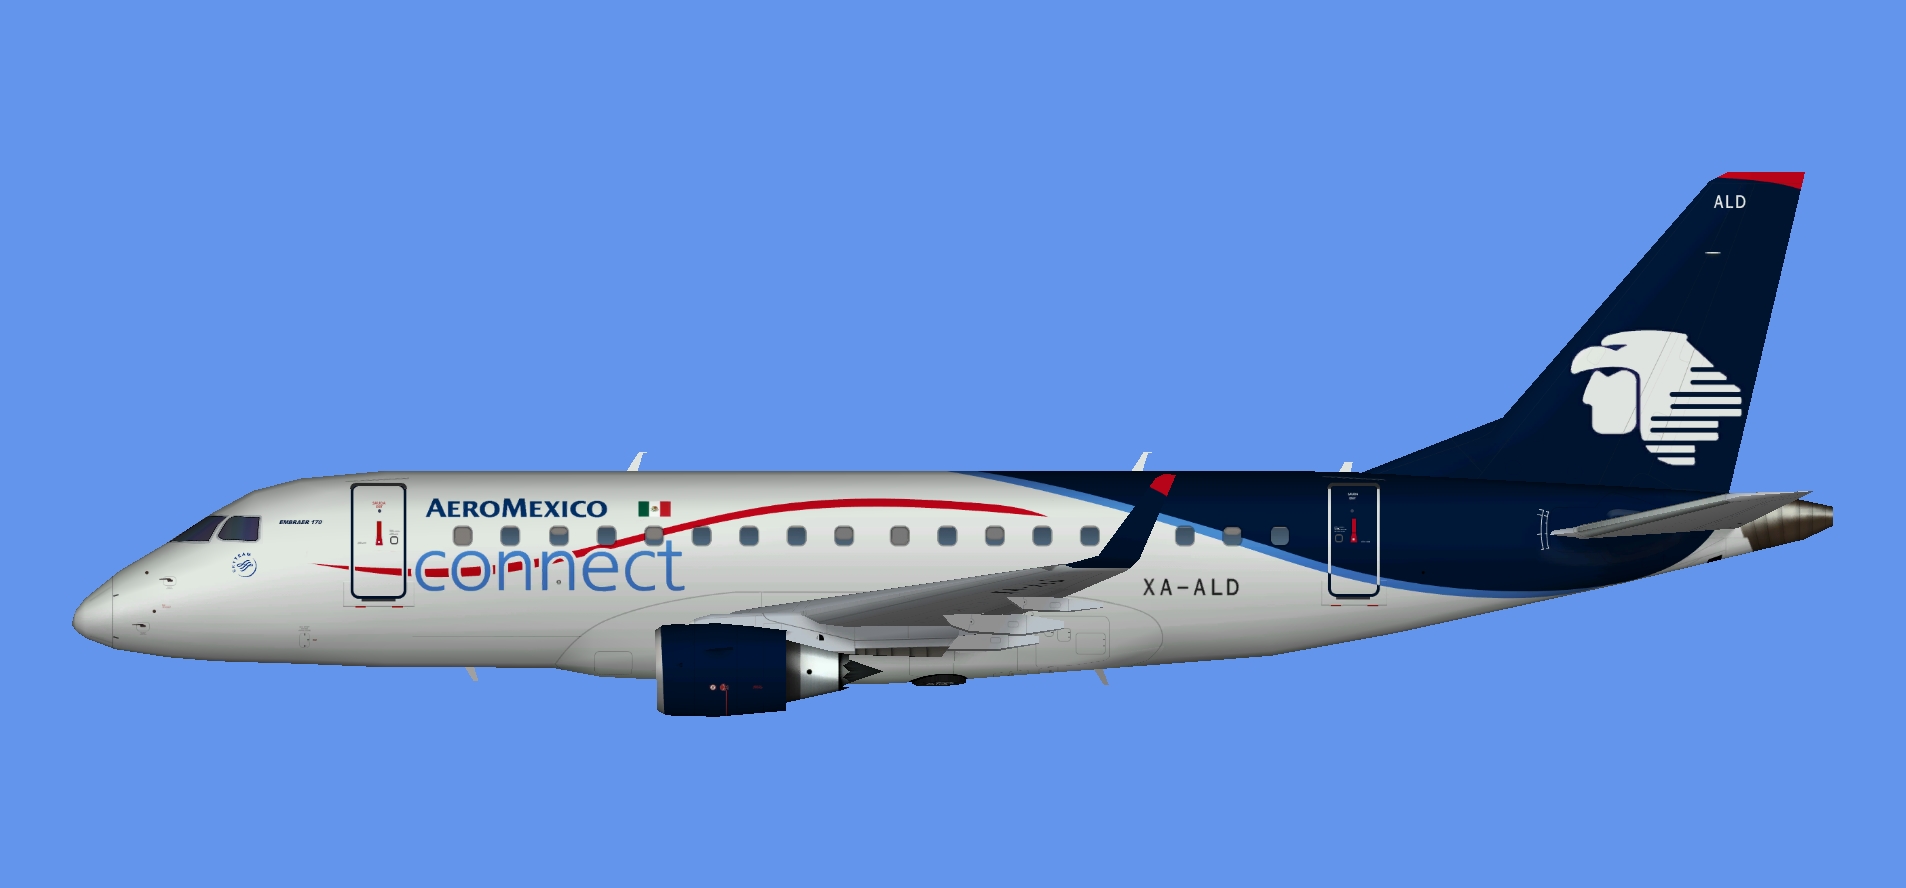 Aeromexico Connect Embraer E170 (AIA)